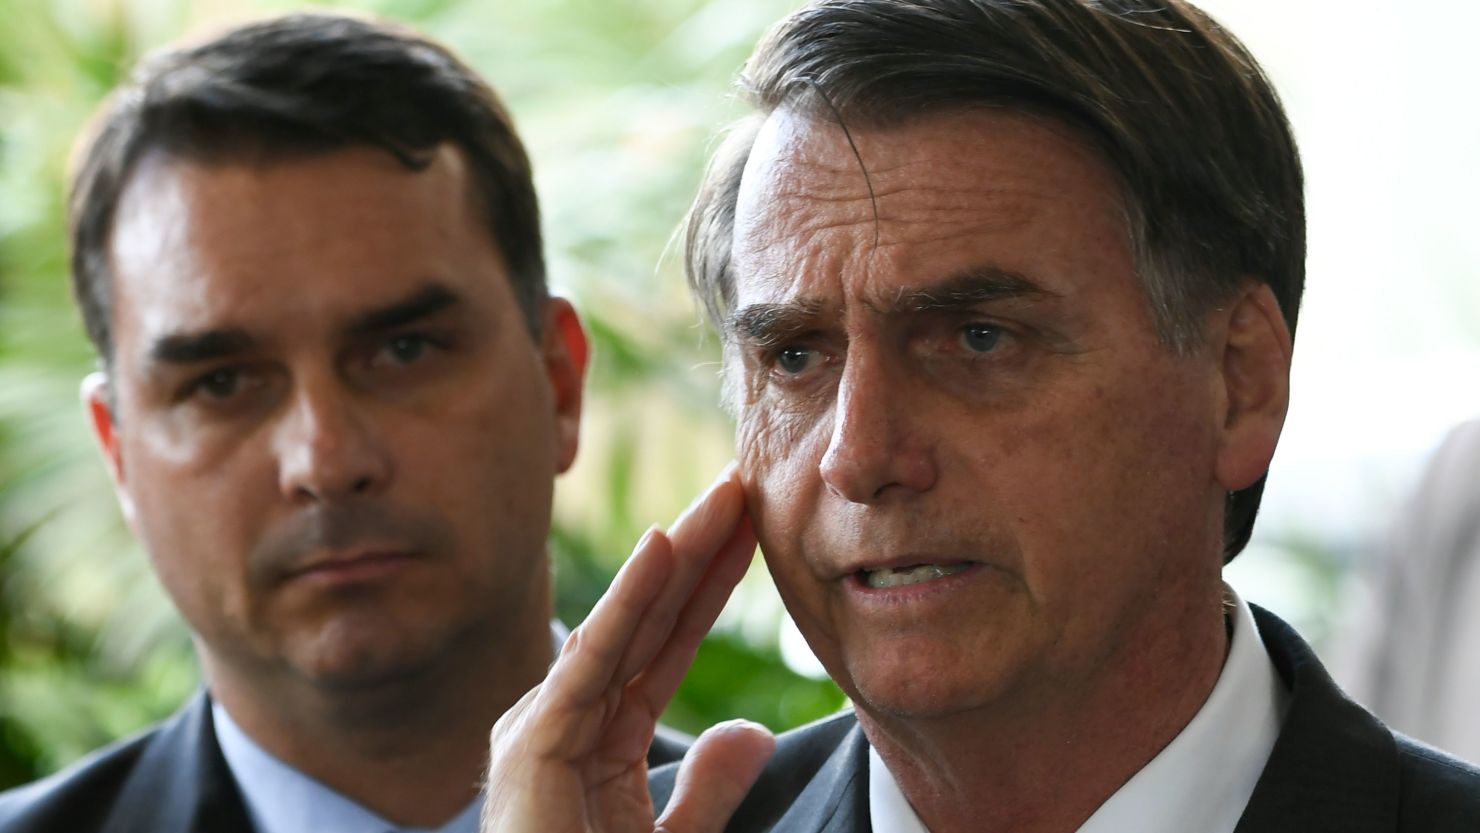 Jair Bolsonaro accompanied by his son Flavio in November 2018.